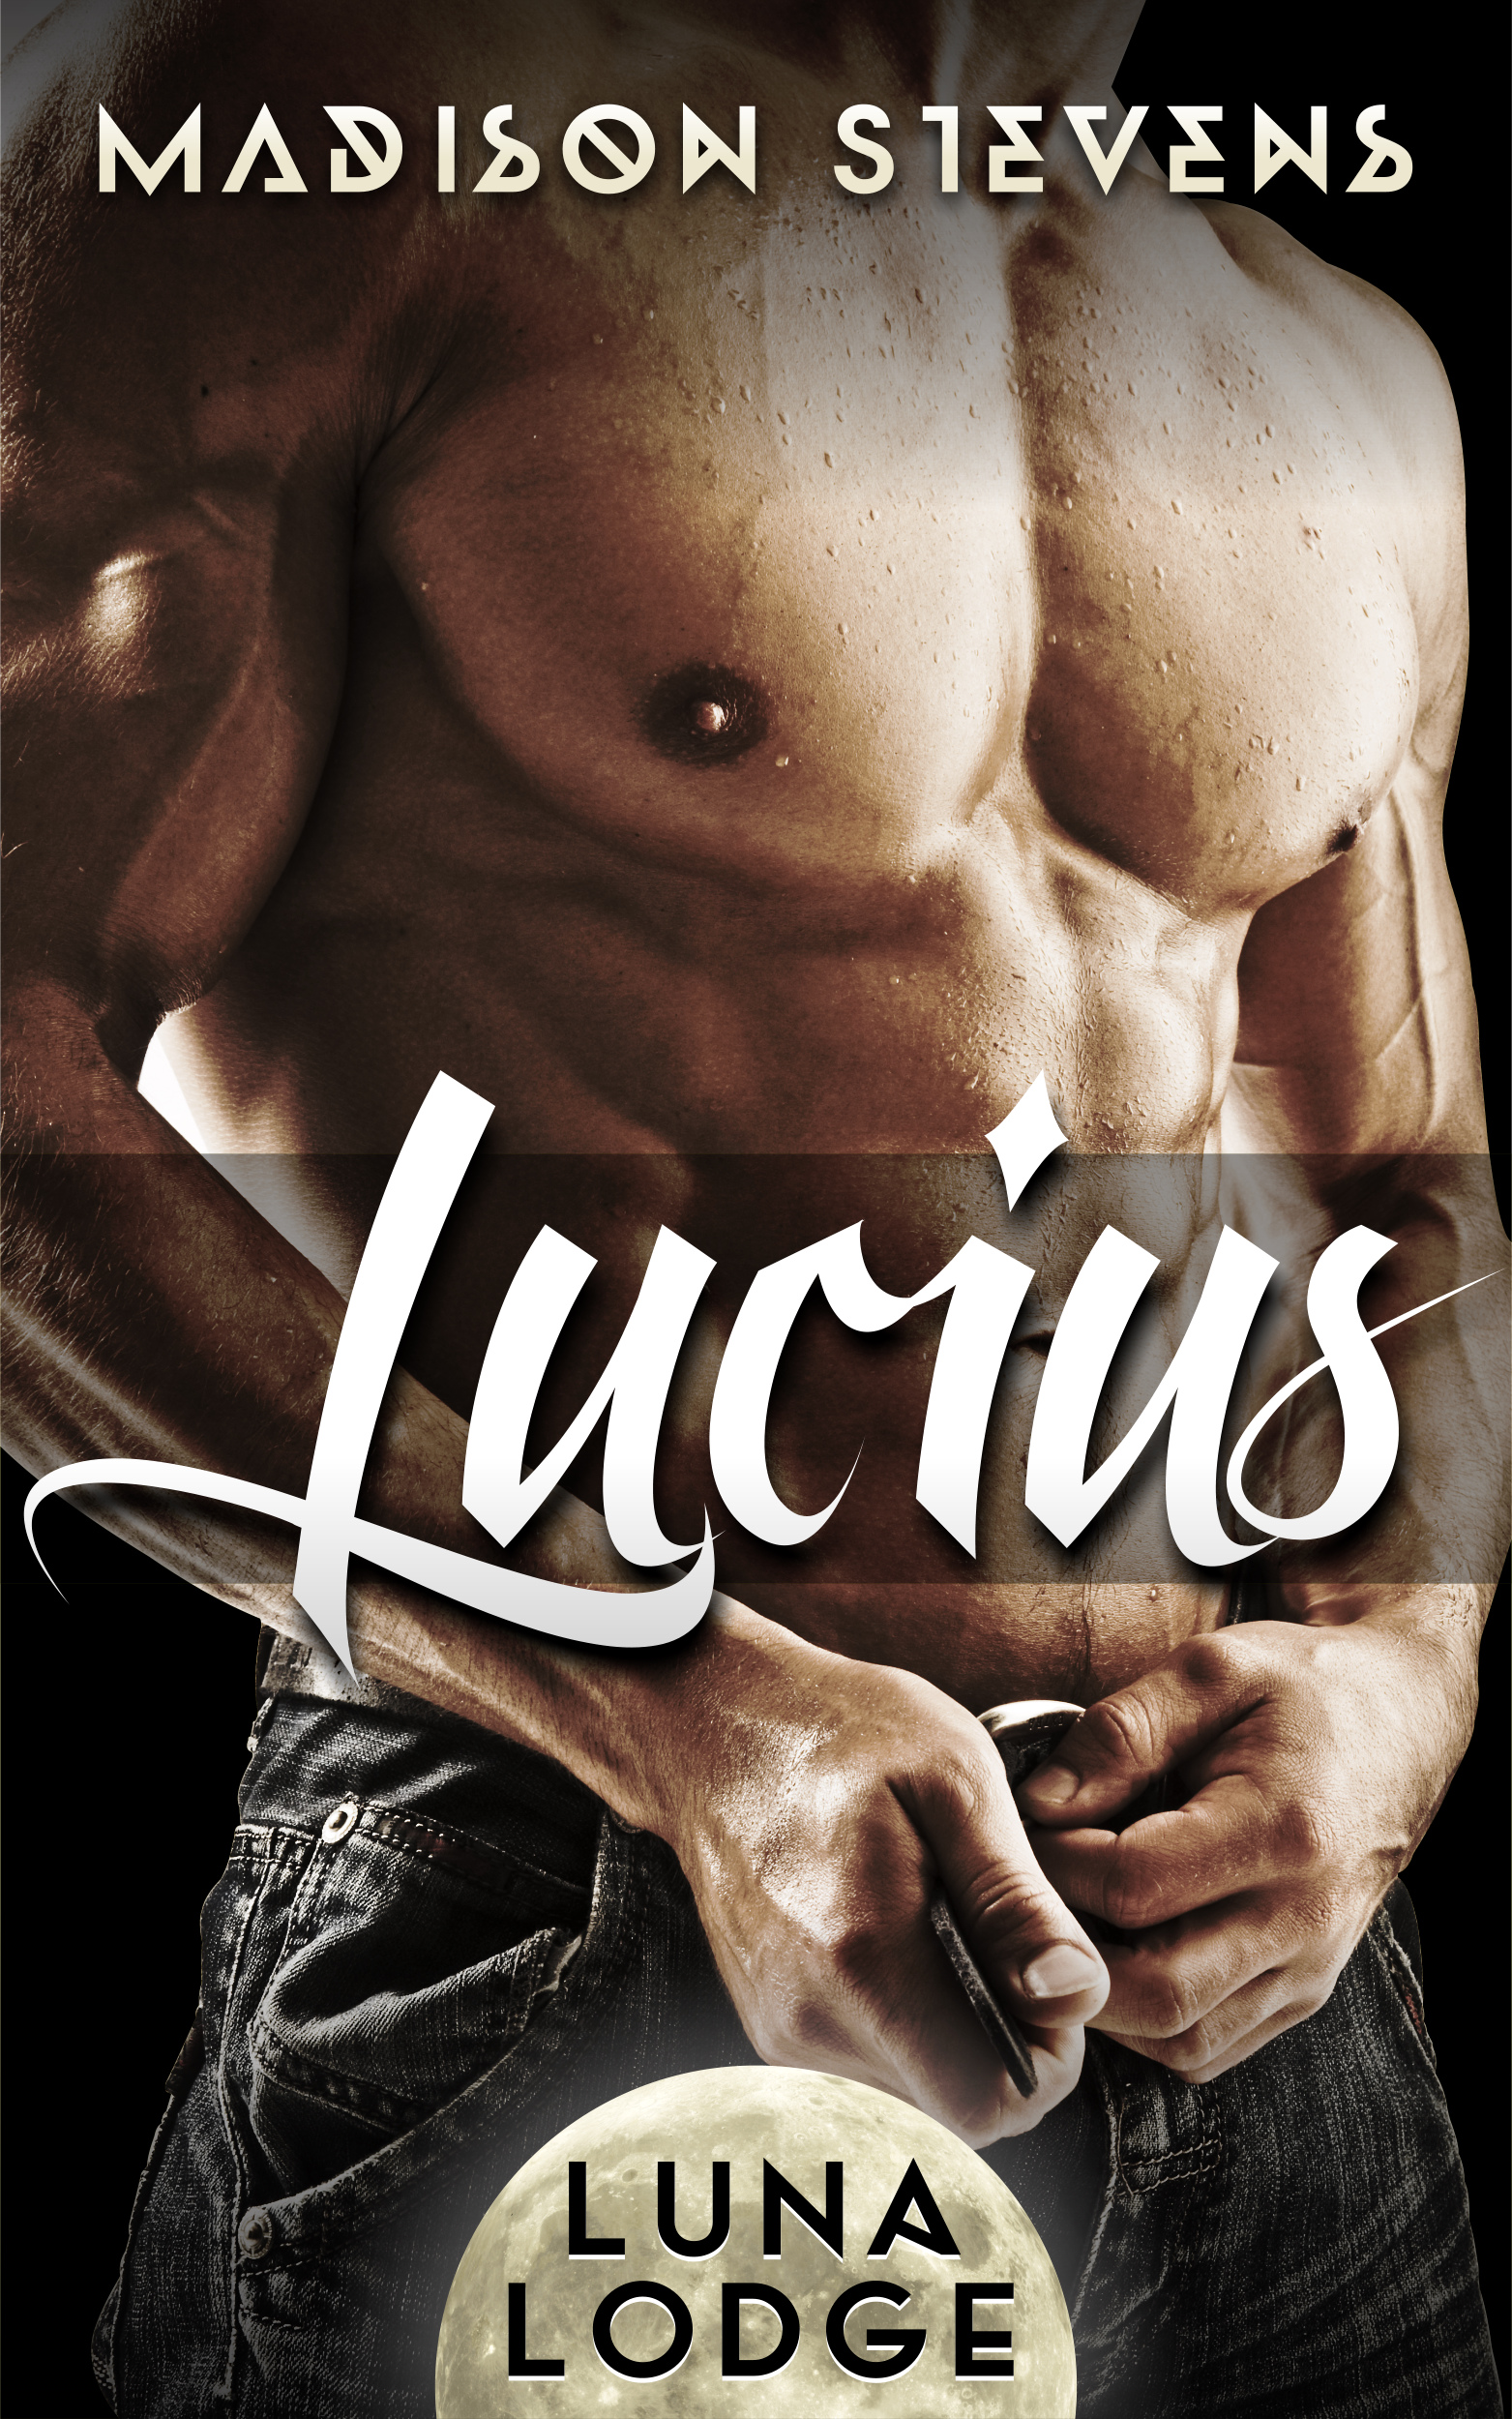 Lucius (Luna Lodge #3) (2014) by Madison Stevens